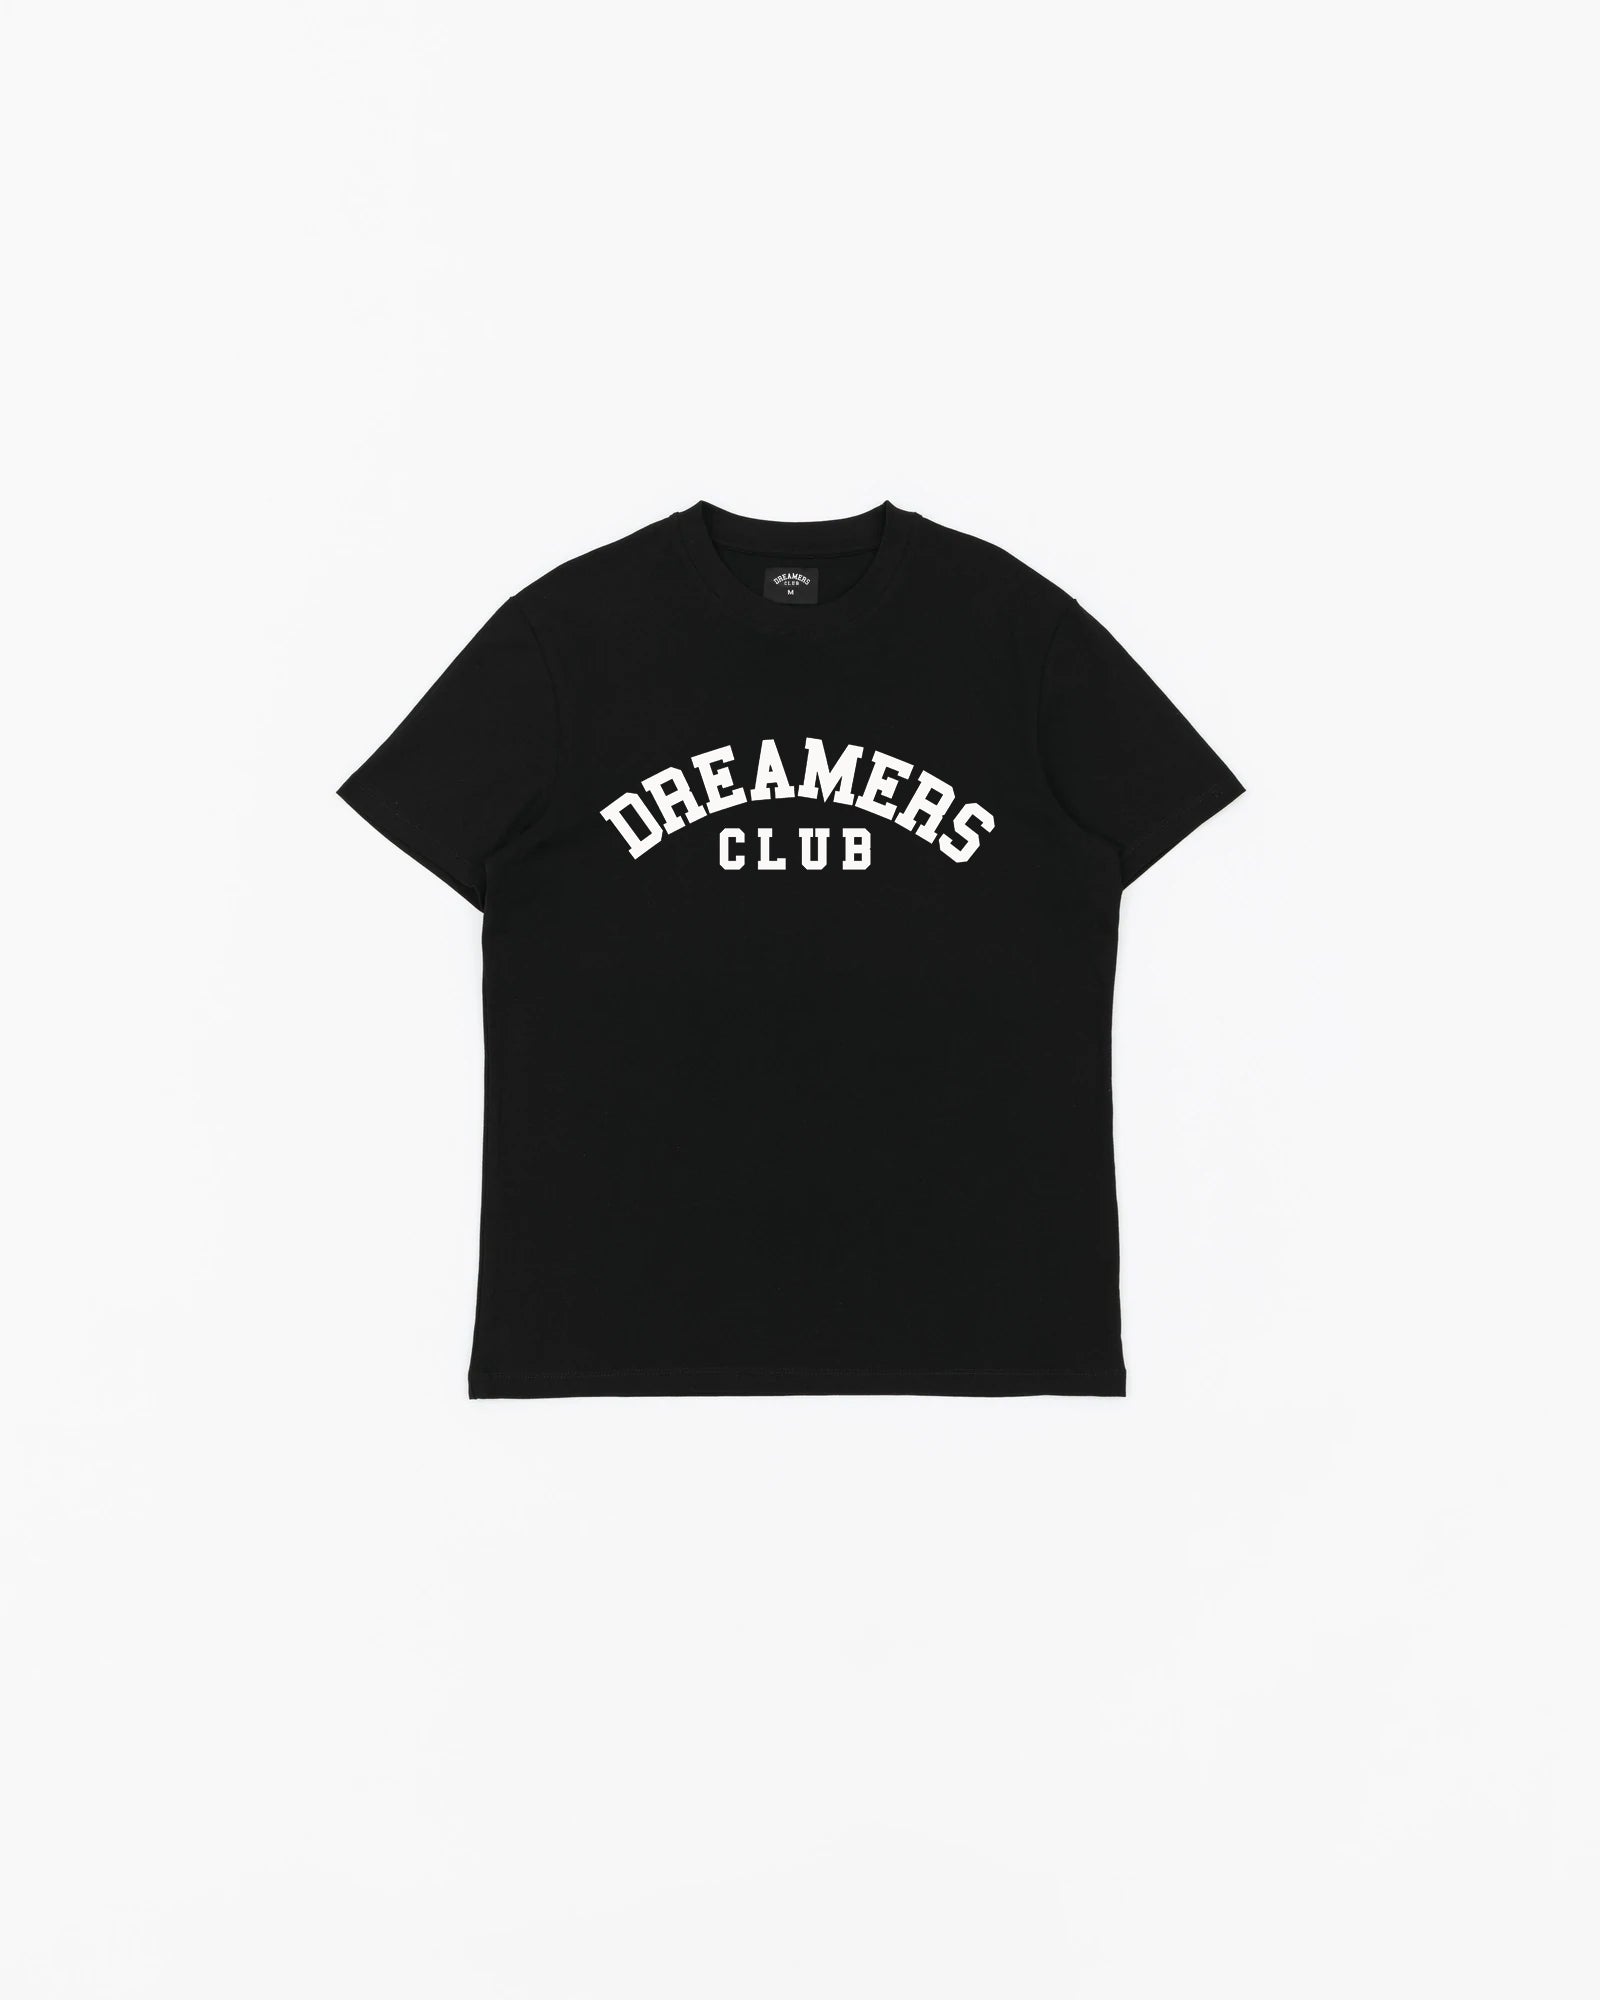 T-shirts – The Dreamers Club